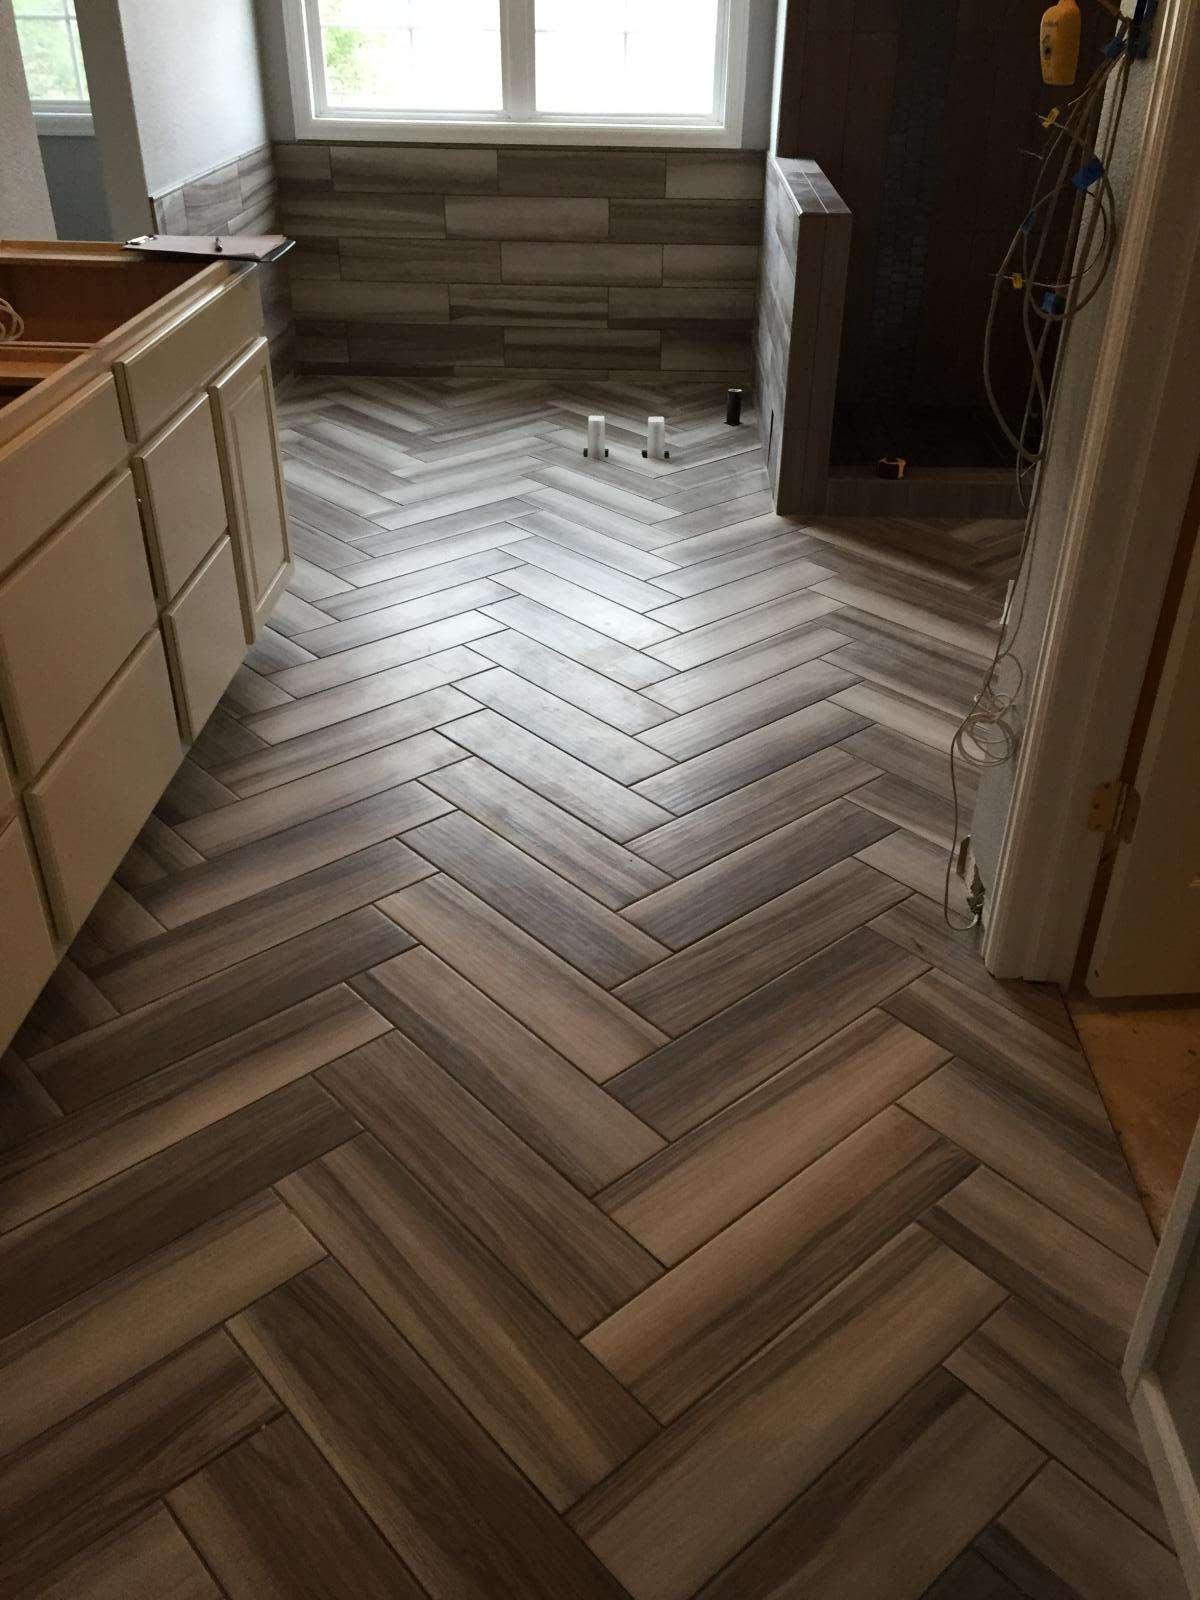 refinished tile floors